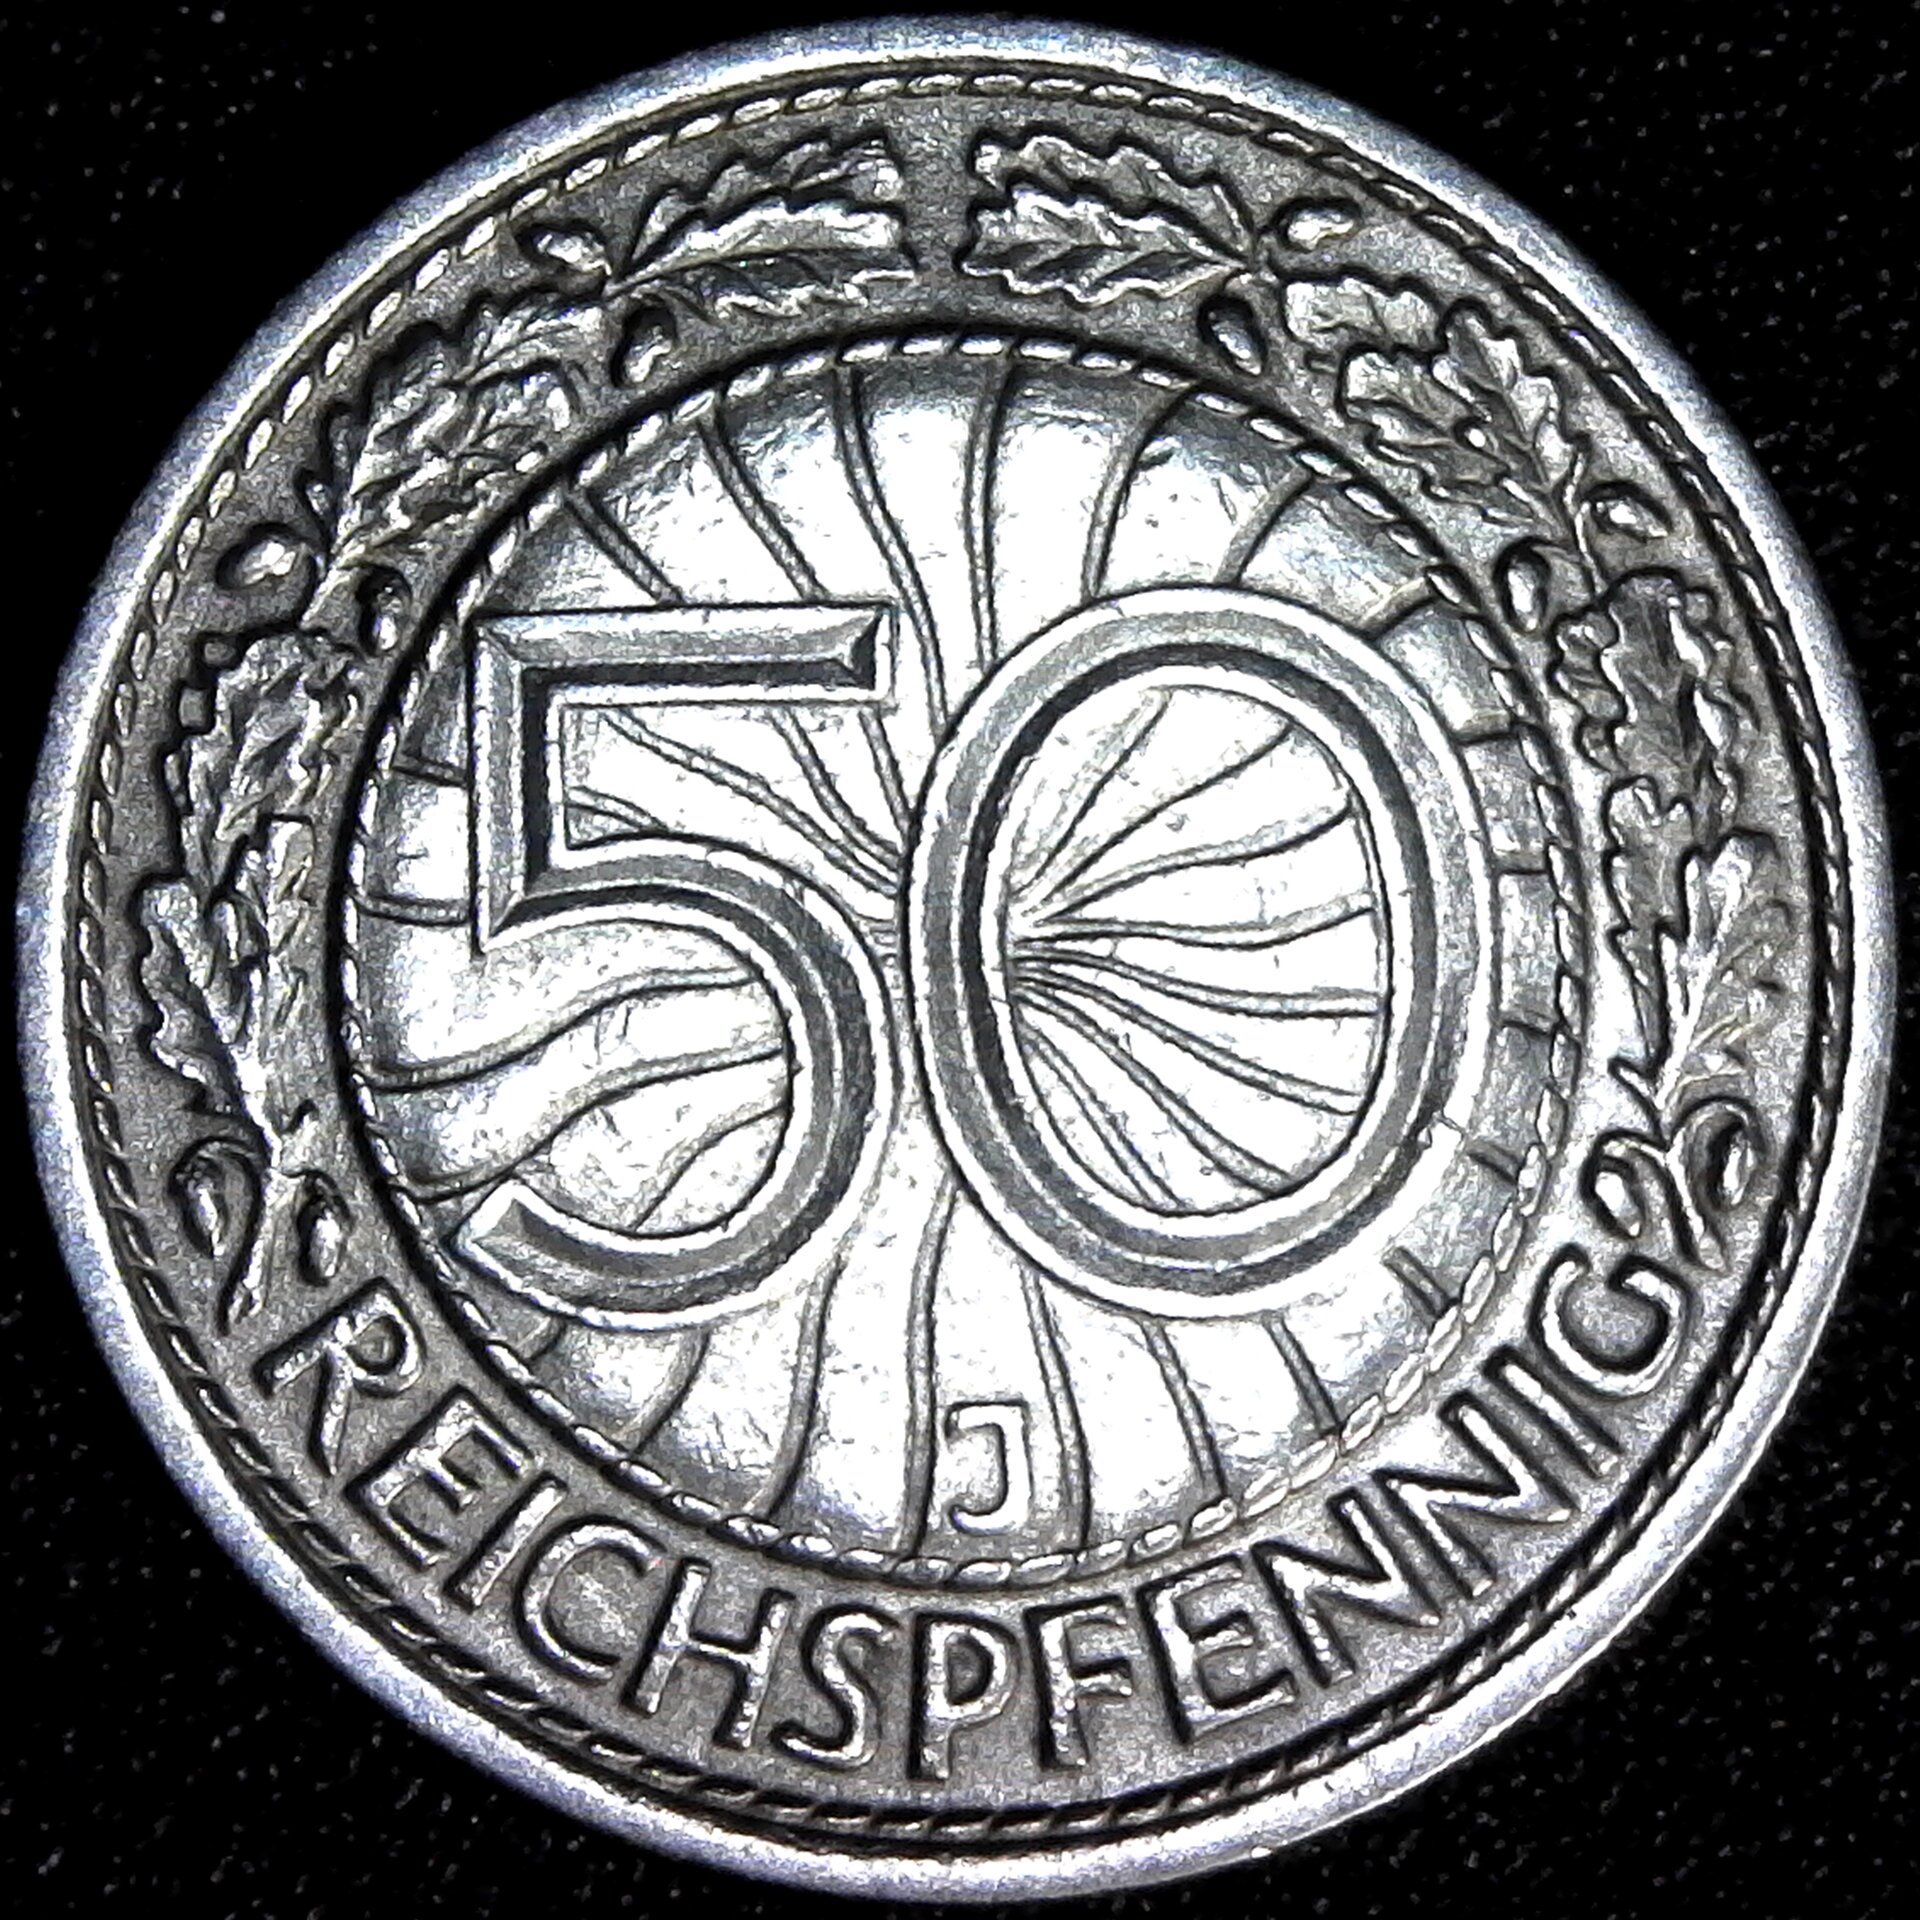 Germany 50 Reichspfennig 1927 J rev.jpg